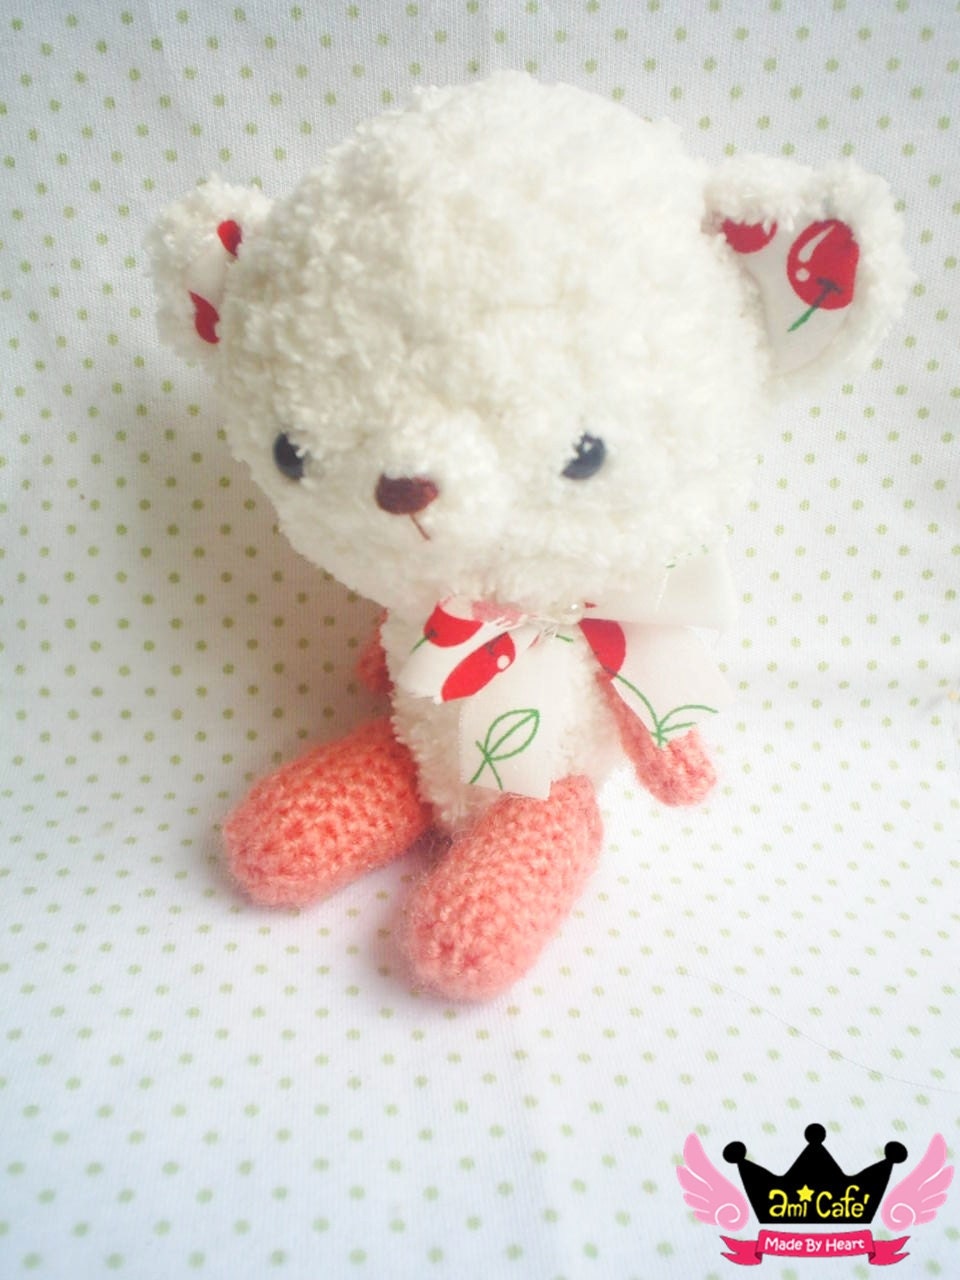 Cherry - Cotton Candy Amigurumi bear by Ami Cafe' - READY TO SHIP